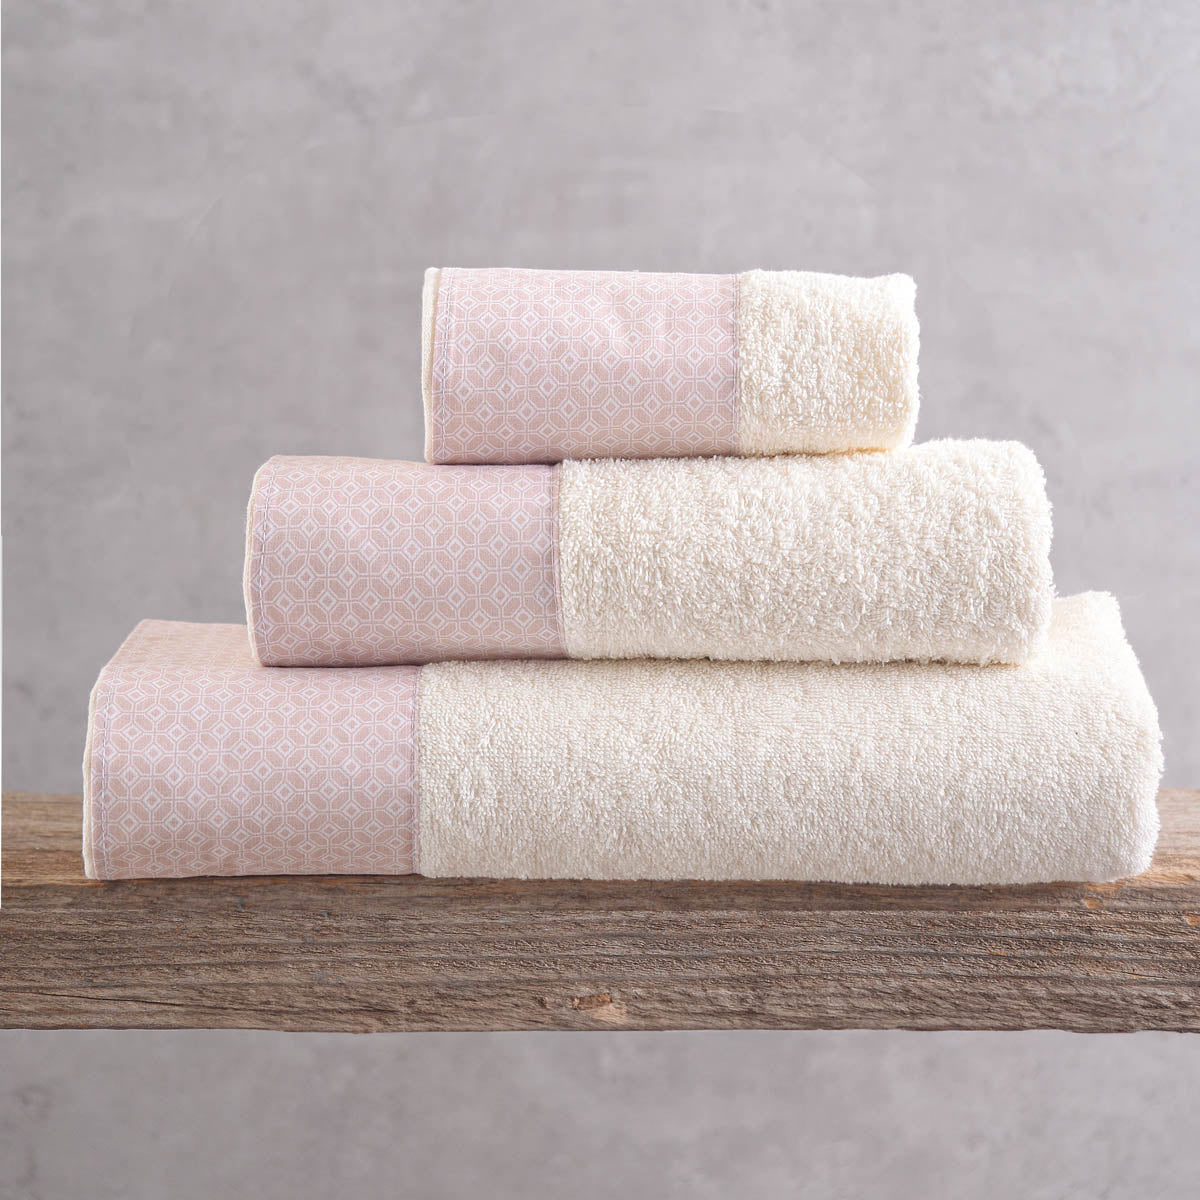 SINCLAIR Εκρού-Ροζ - Σετ πετσέτες 3 τεμ. Εκρού - ροζ 30 x 50, 50 x 90, 80 x 150 από την εταιρεία Rythmos Home